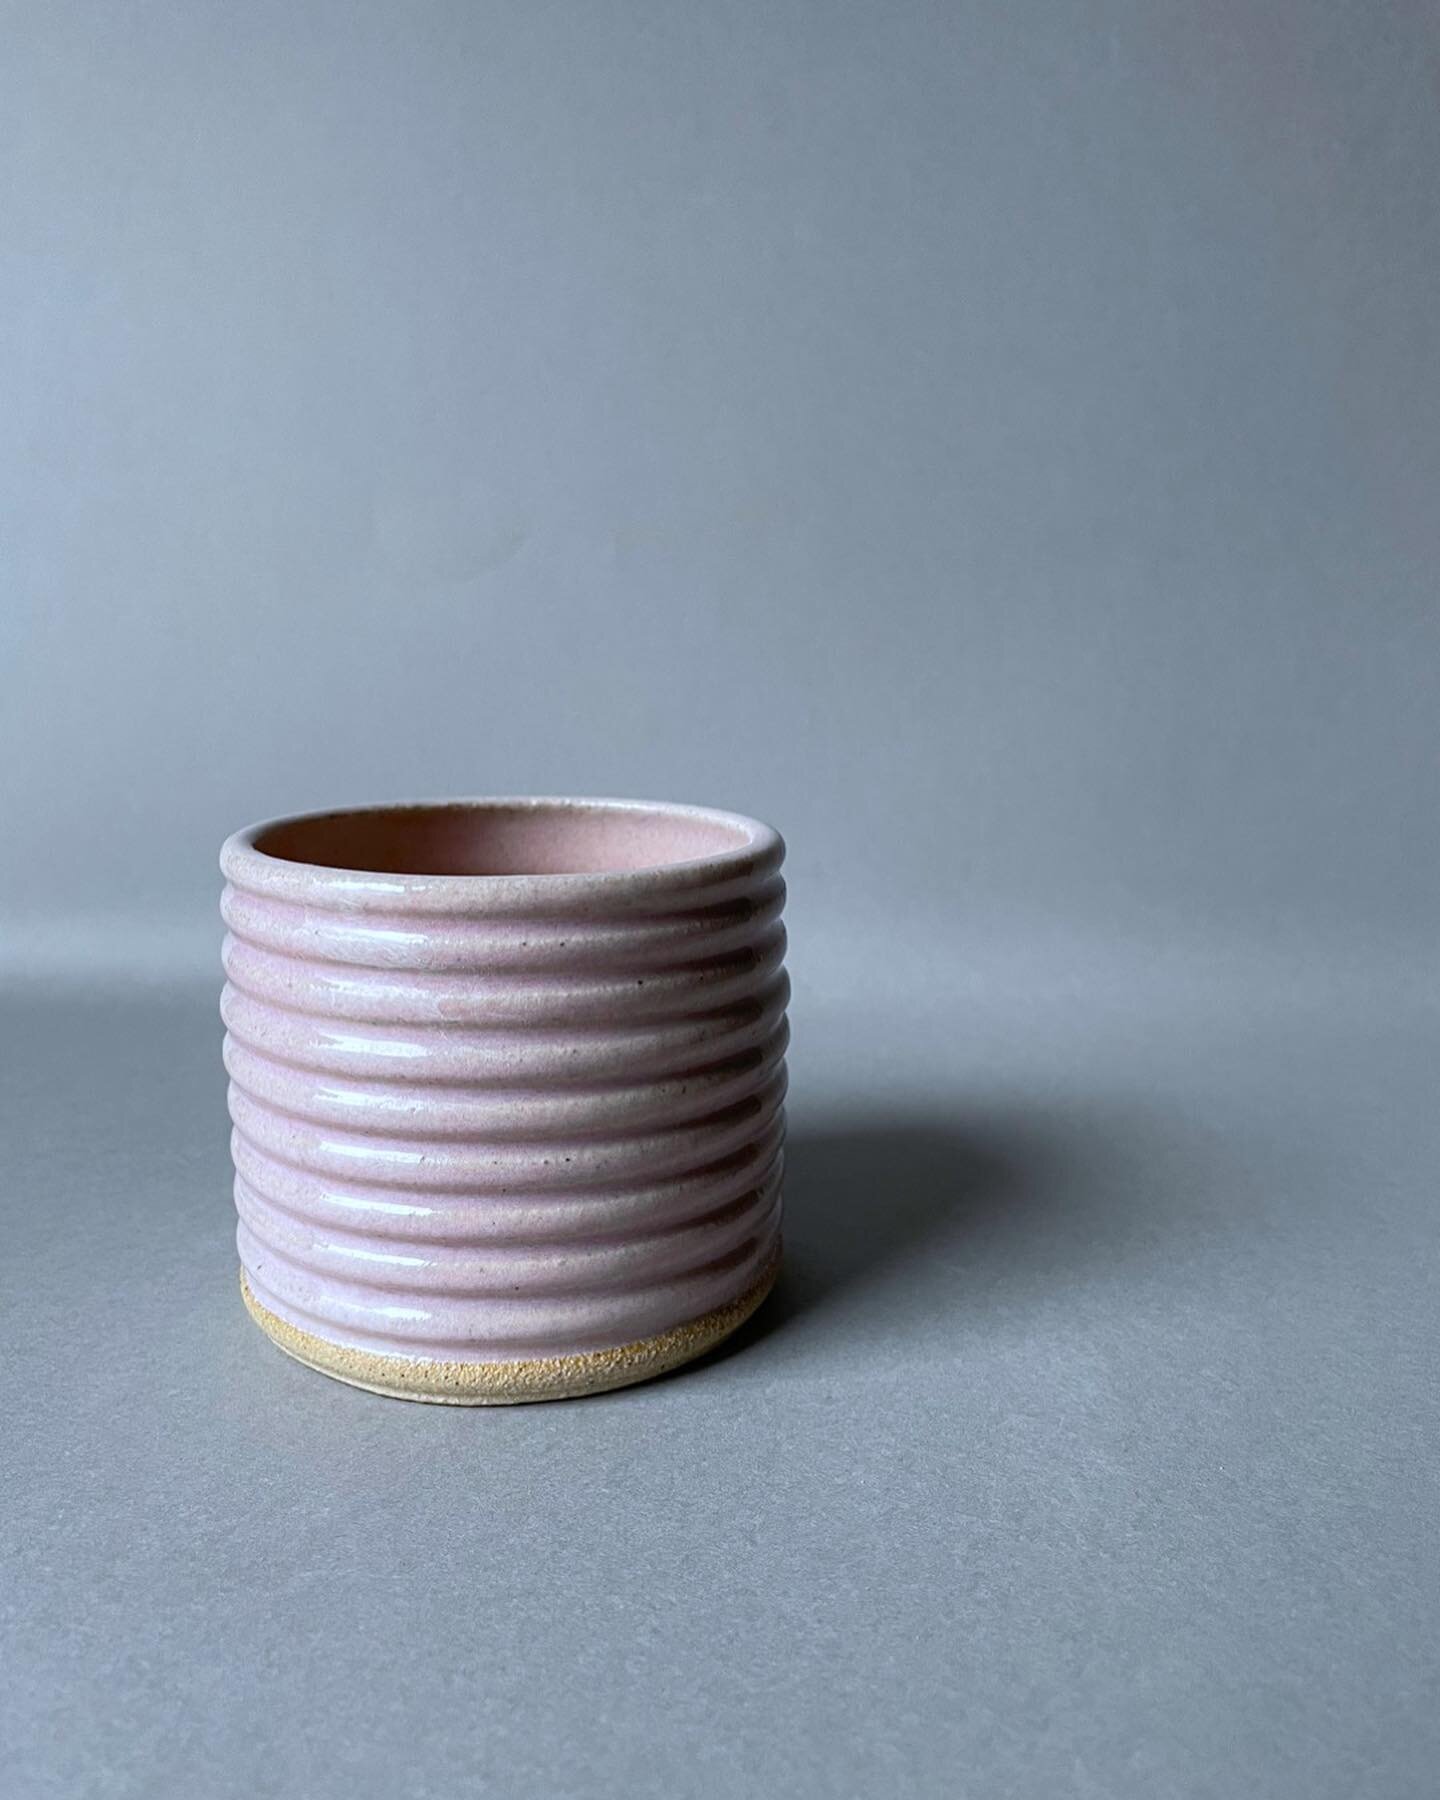 Pink ribbed tumblers or mini-planters on speckled clay
.
.
.
#pottery #ceramic #ceramics #potterylove #ceramicdesign #ceramicist #modernceramics #ceramiclicious #instaceramics #loveceramic #wheelthrownceramics #thekilnrooms #ihavethisthingwithceramic